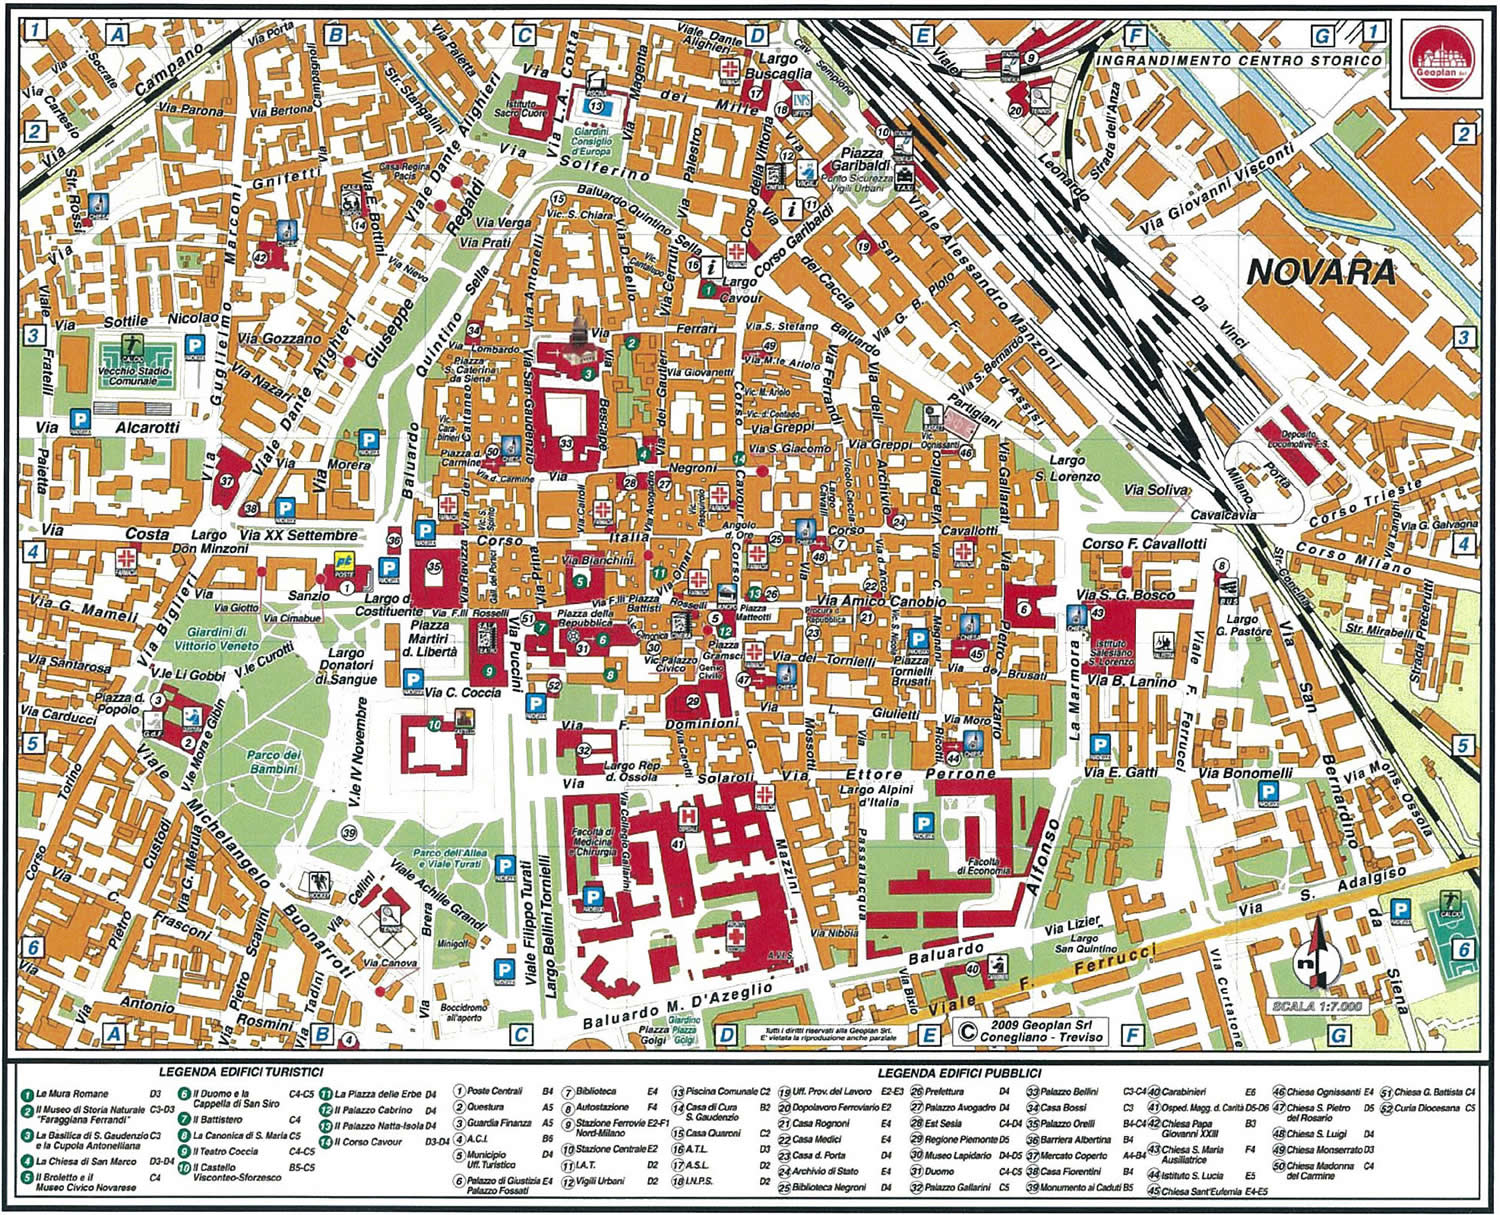 Novara Map and Novara Satellite Image